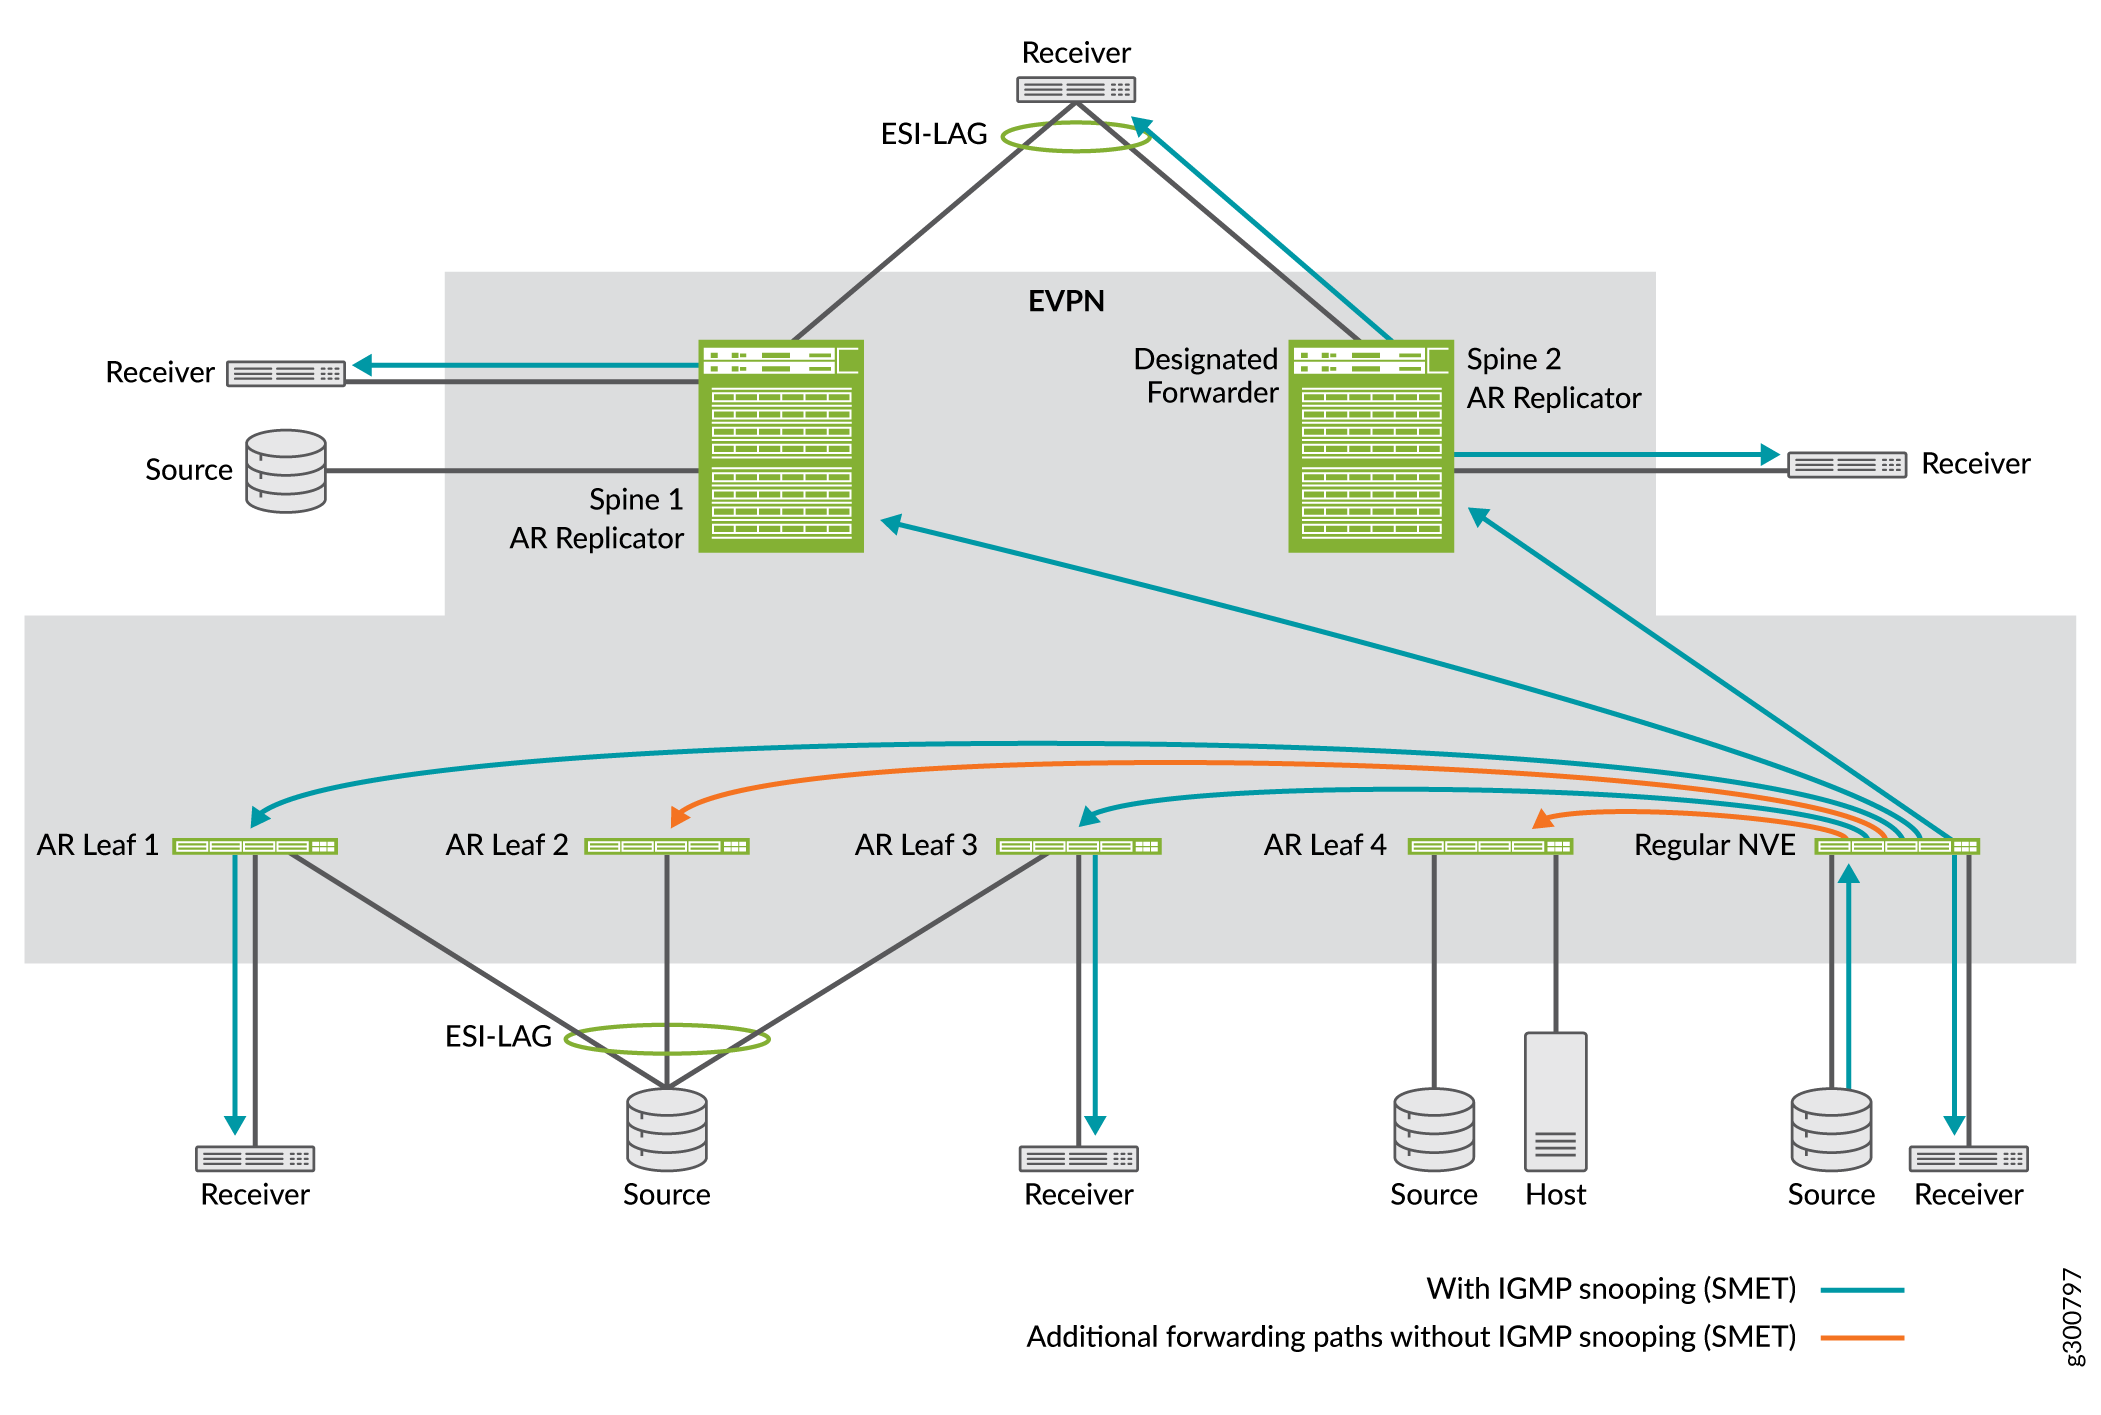 Multicast Source Traffic Ingress at a Regular NVE Device